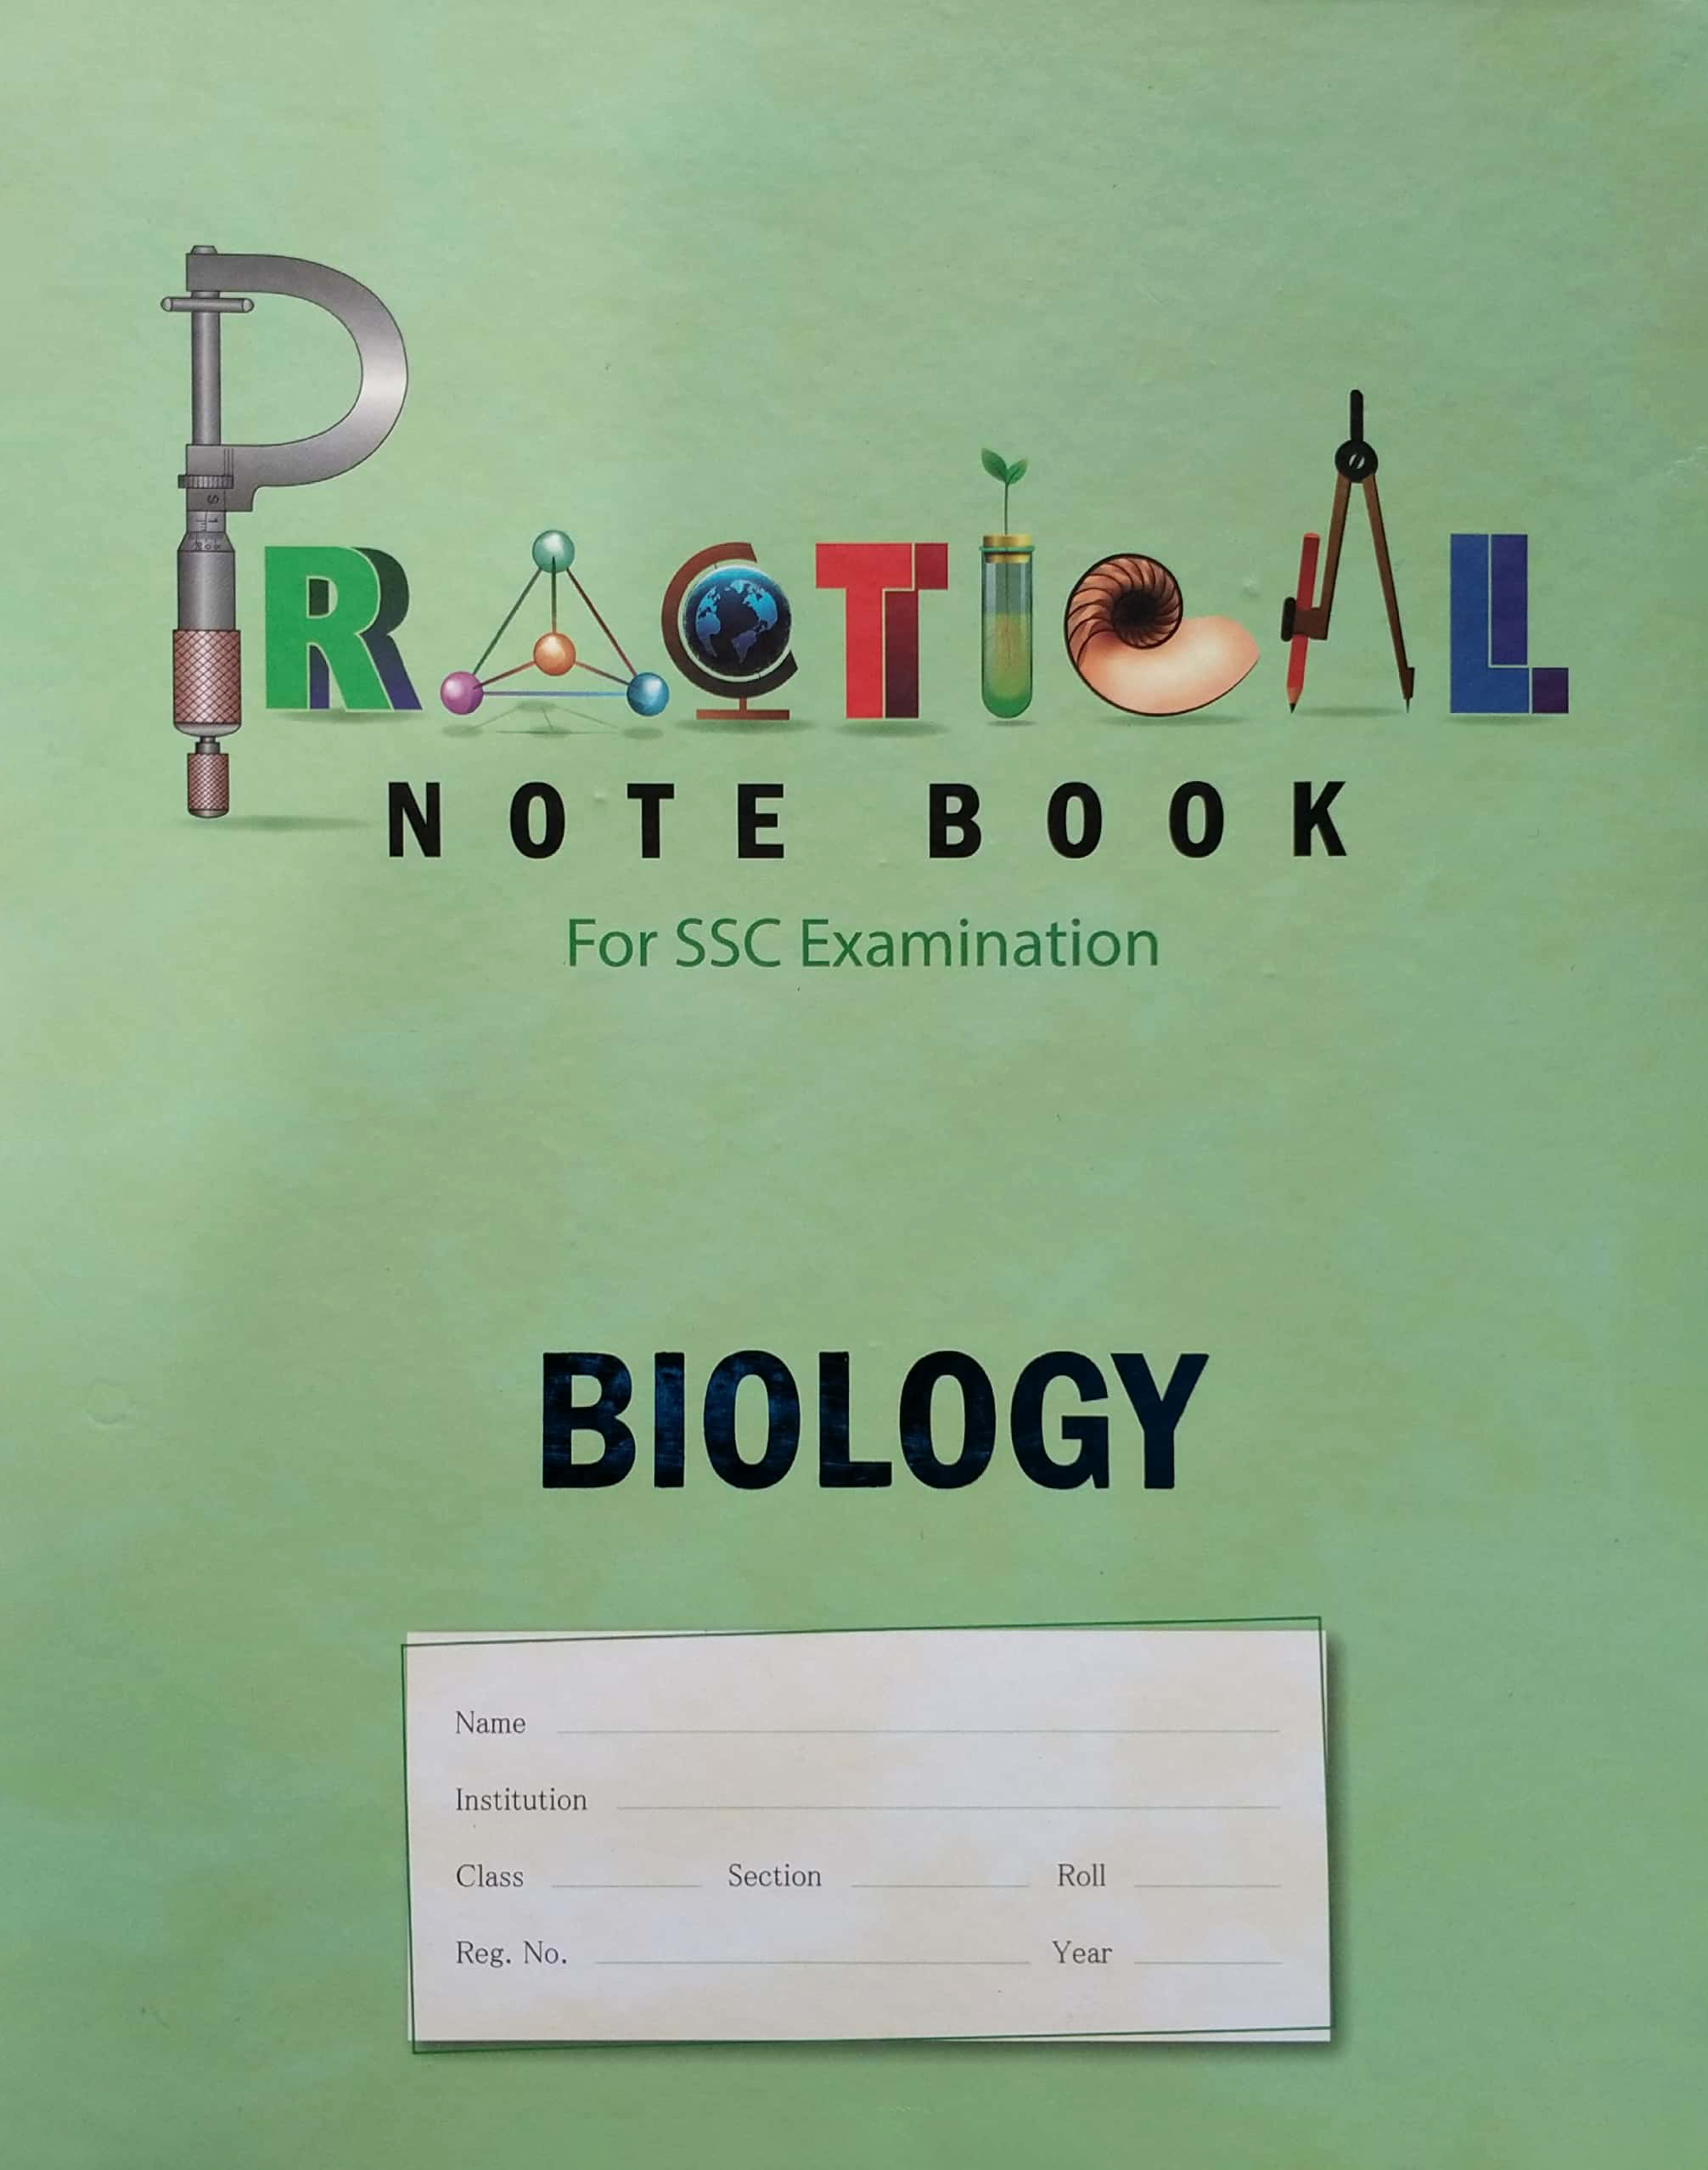 SSC Practical Note Book Biology 